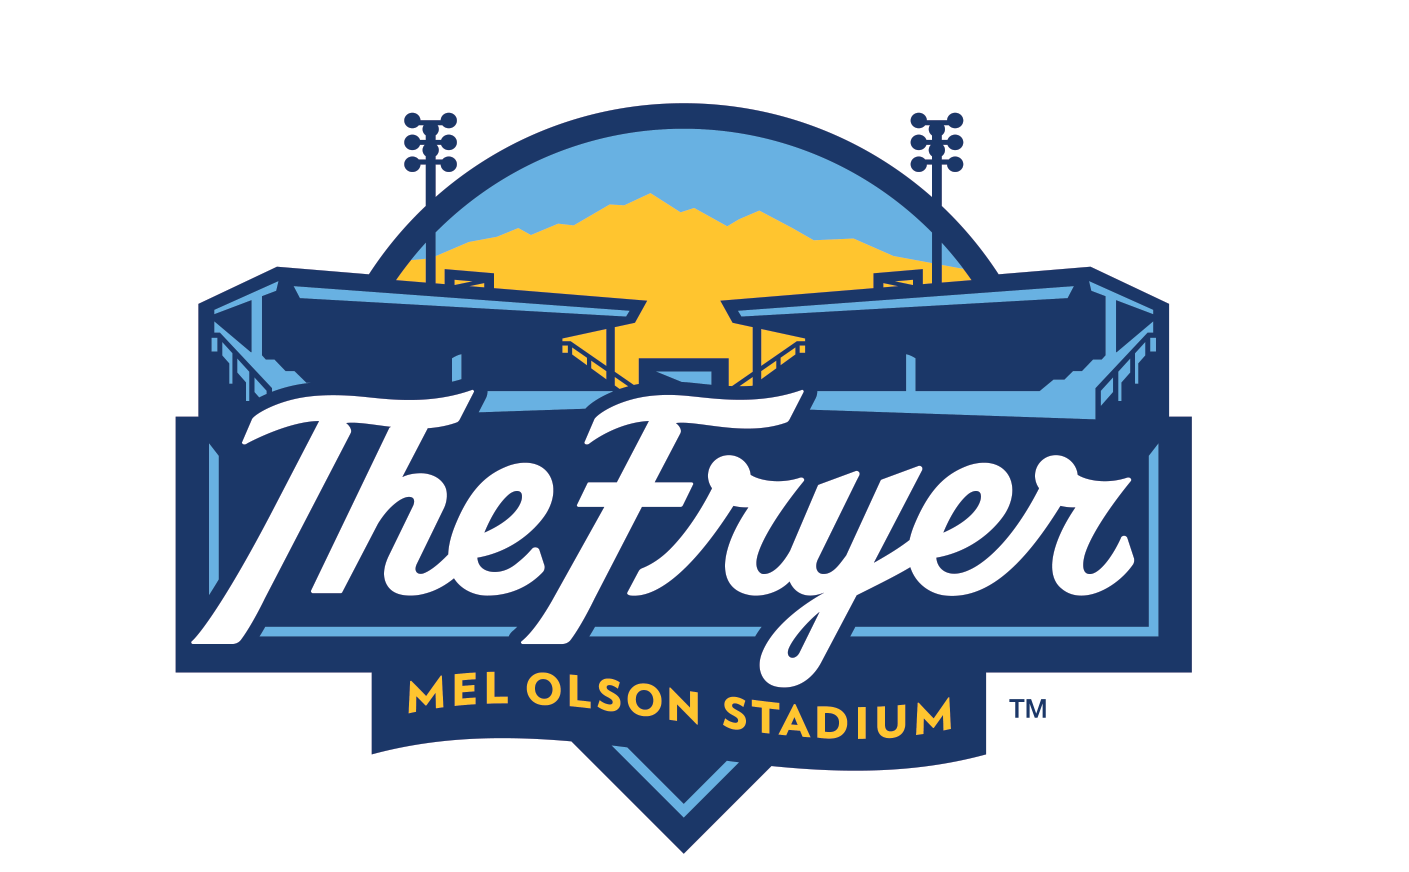 Mel Olson Stadium is nick named The Fryer